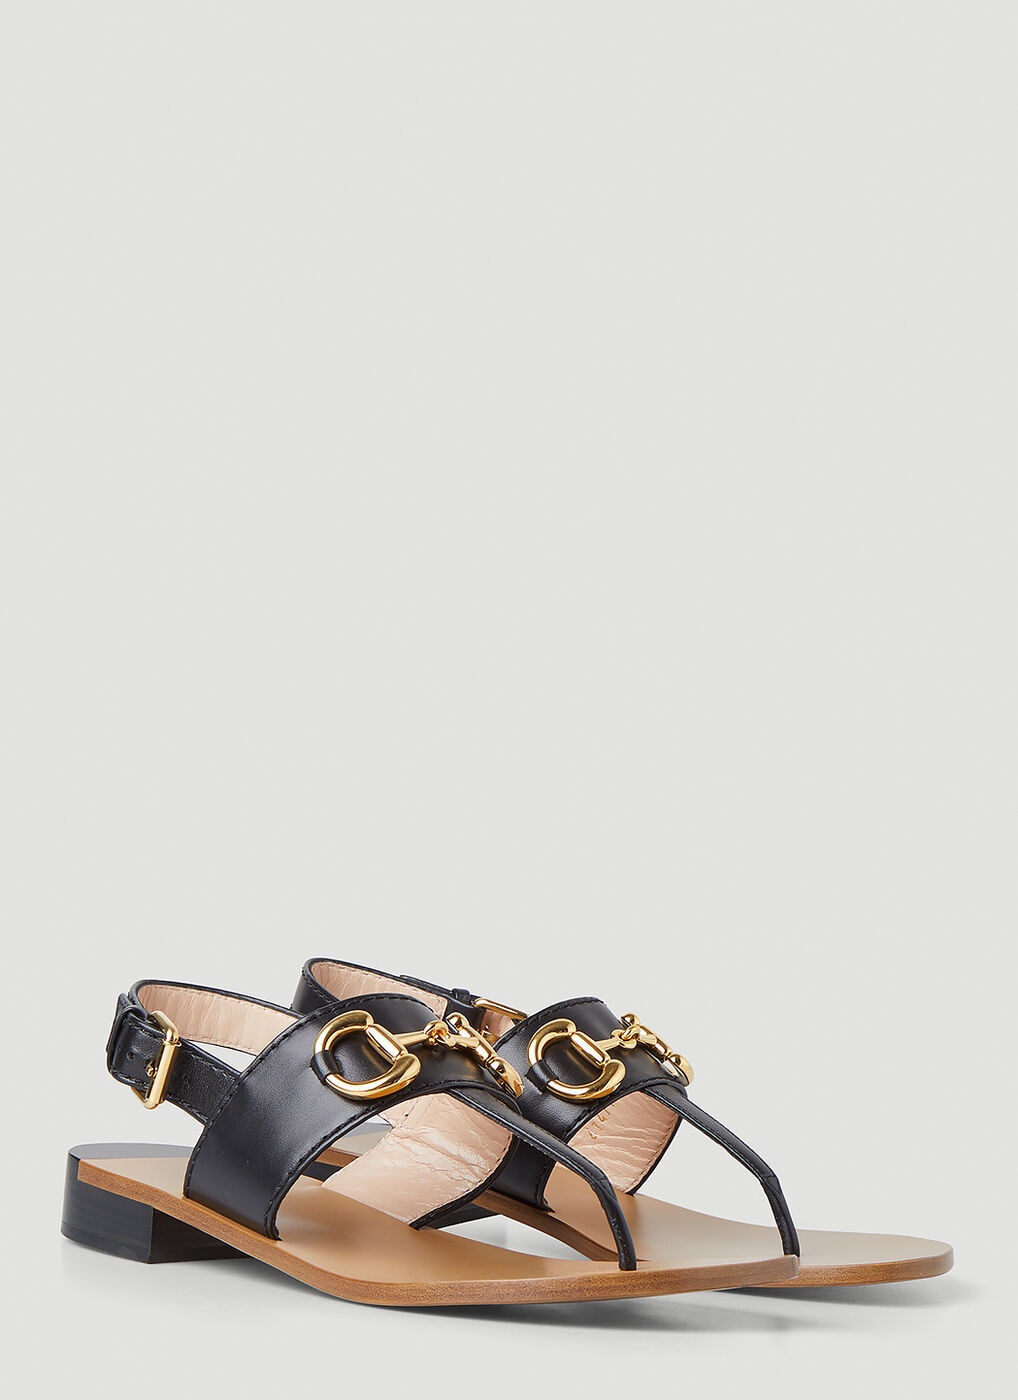 Horsebit Thong Sandals in Black Gucci